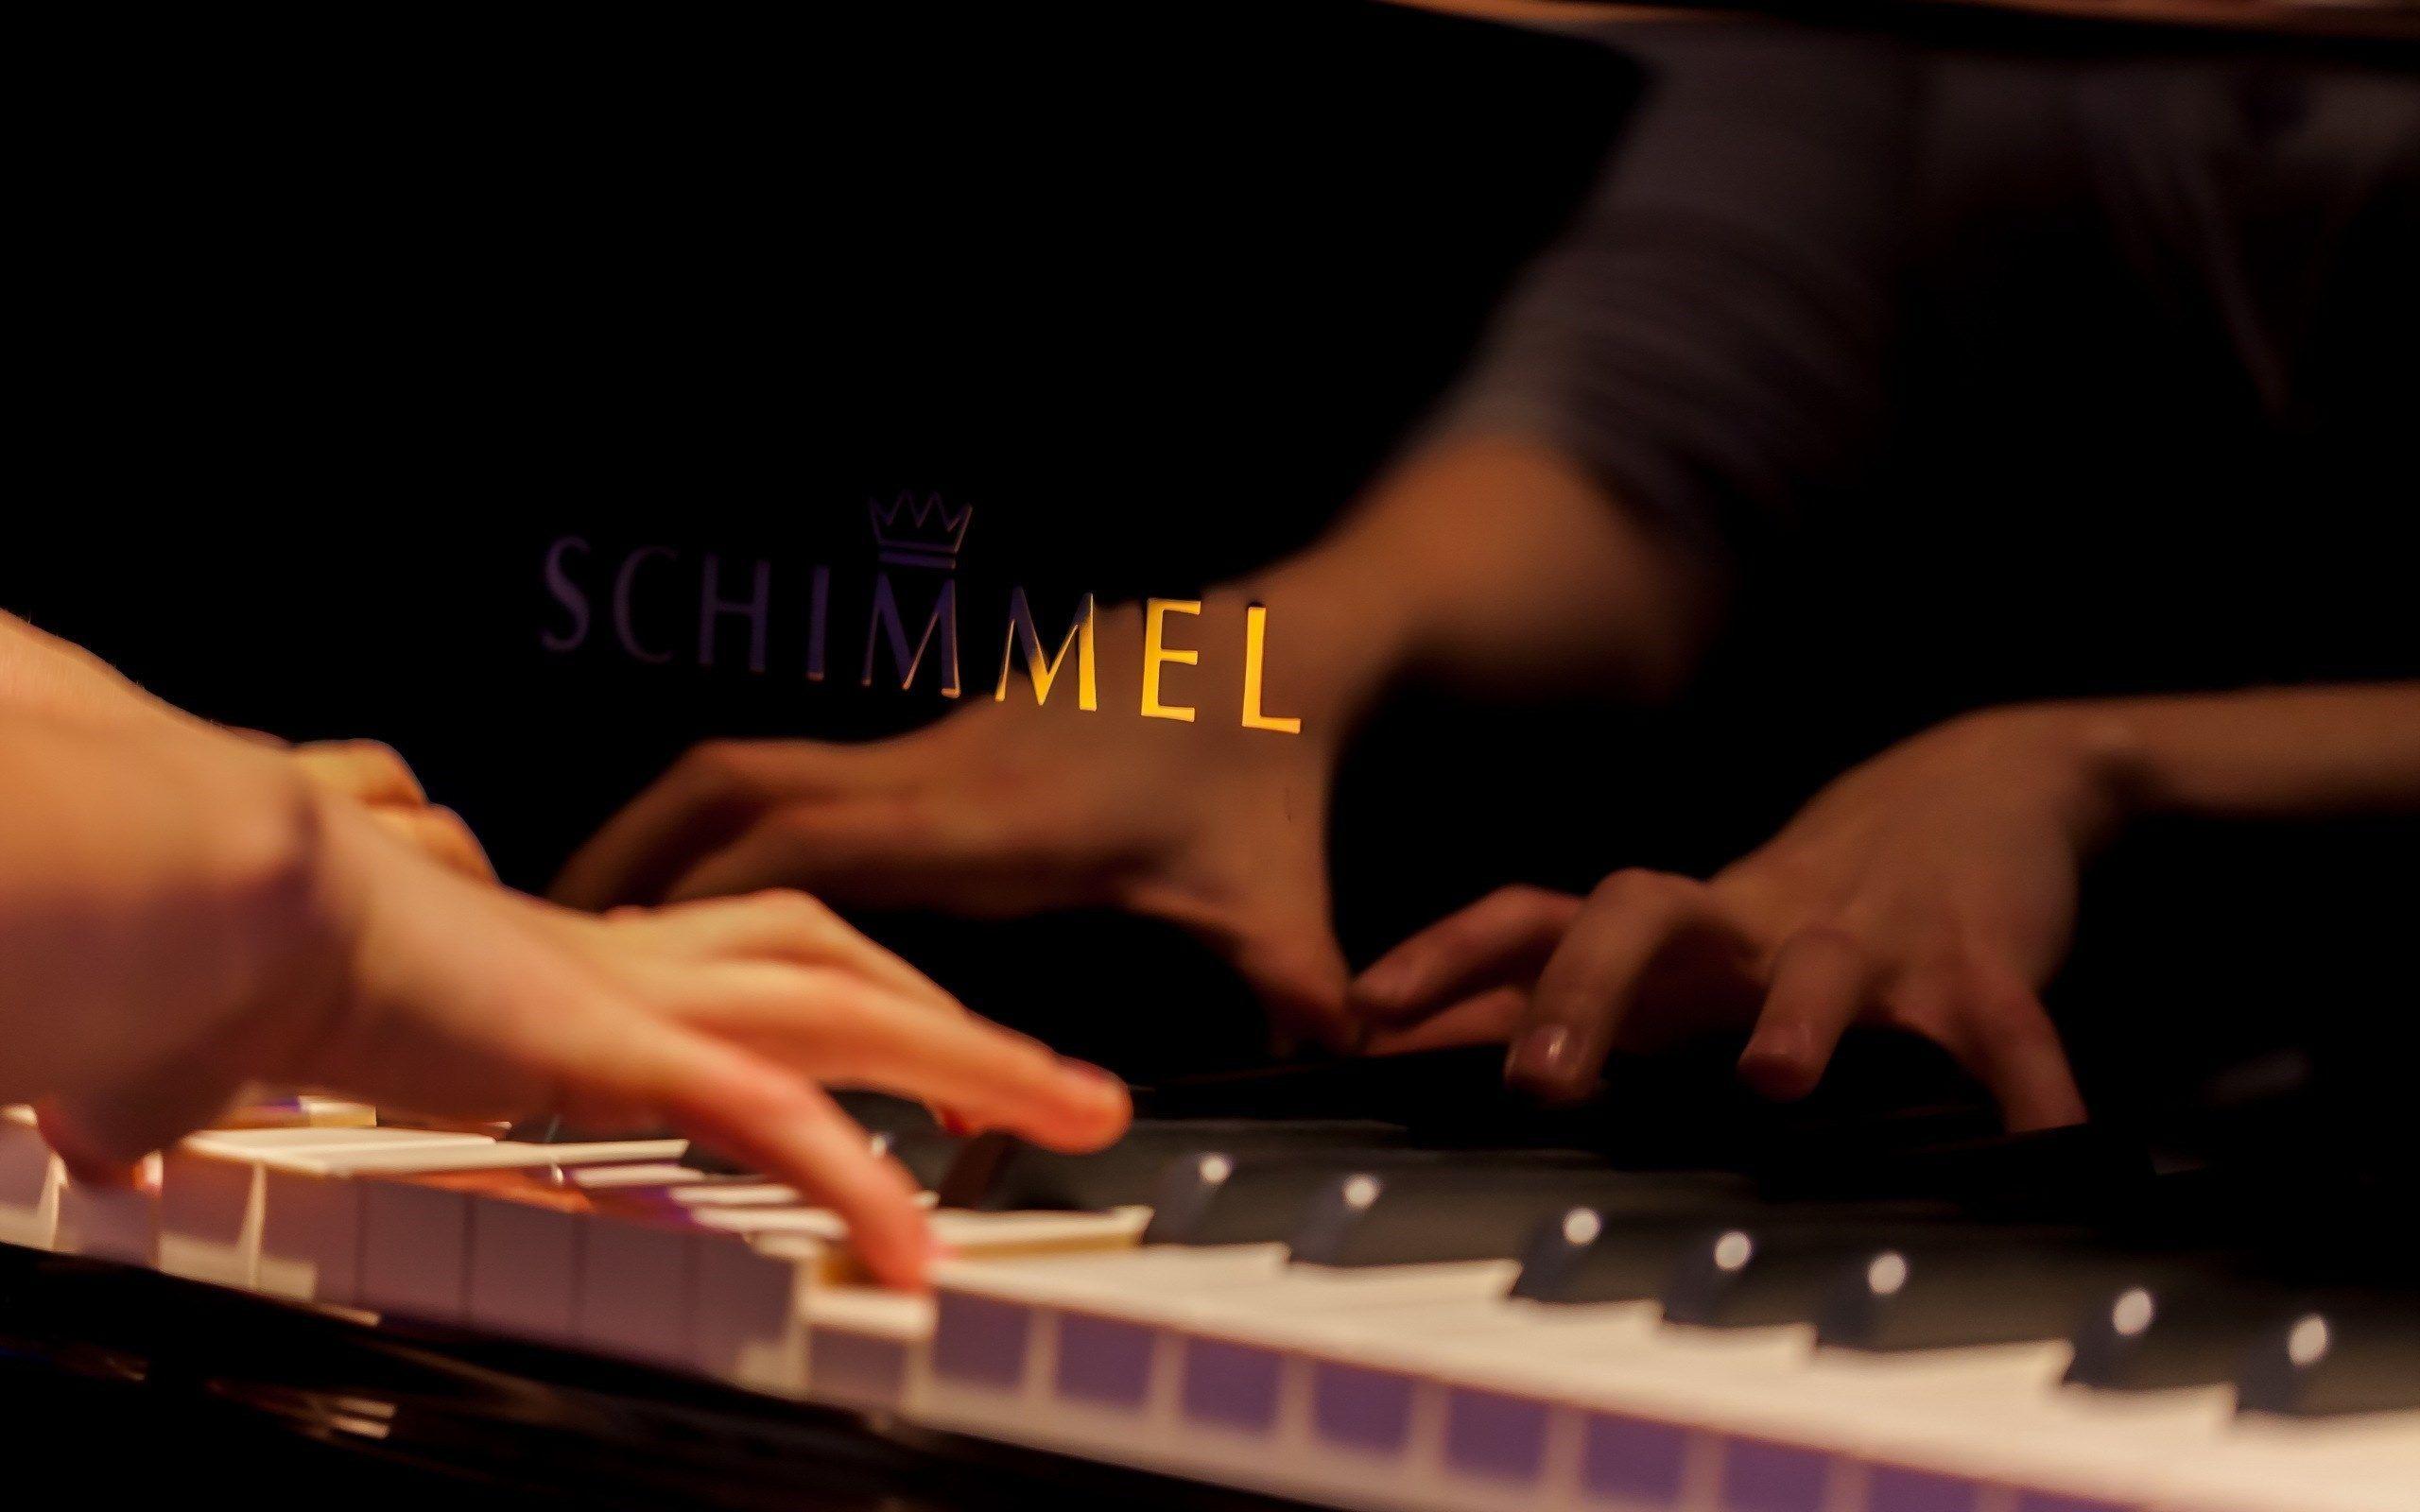 Piano Schimmel Hands HD Wallpaper. Pieces of MĘ